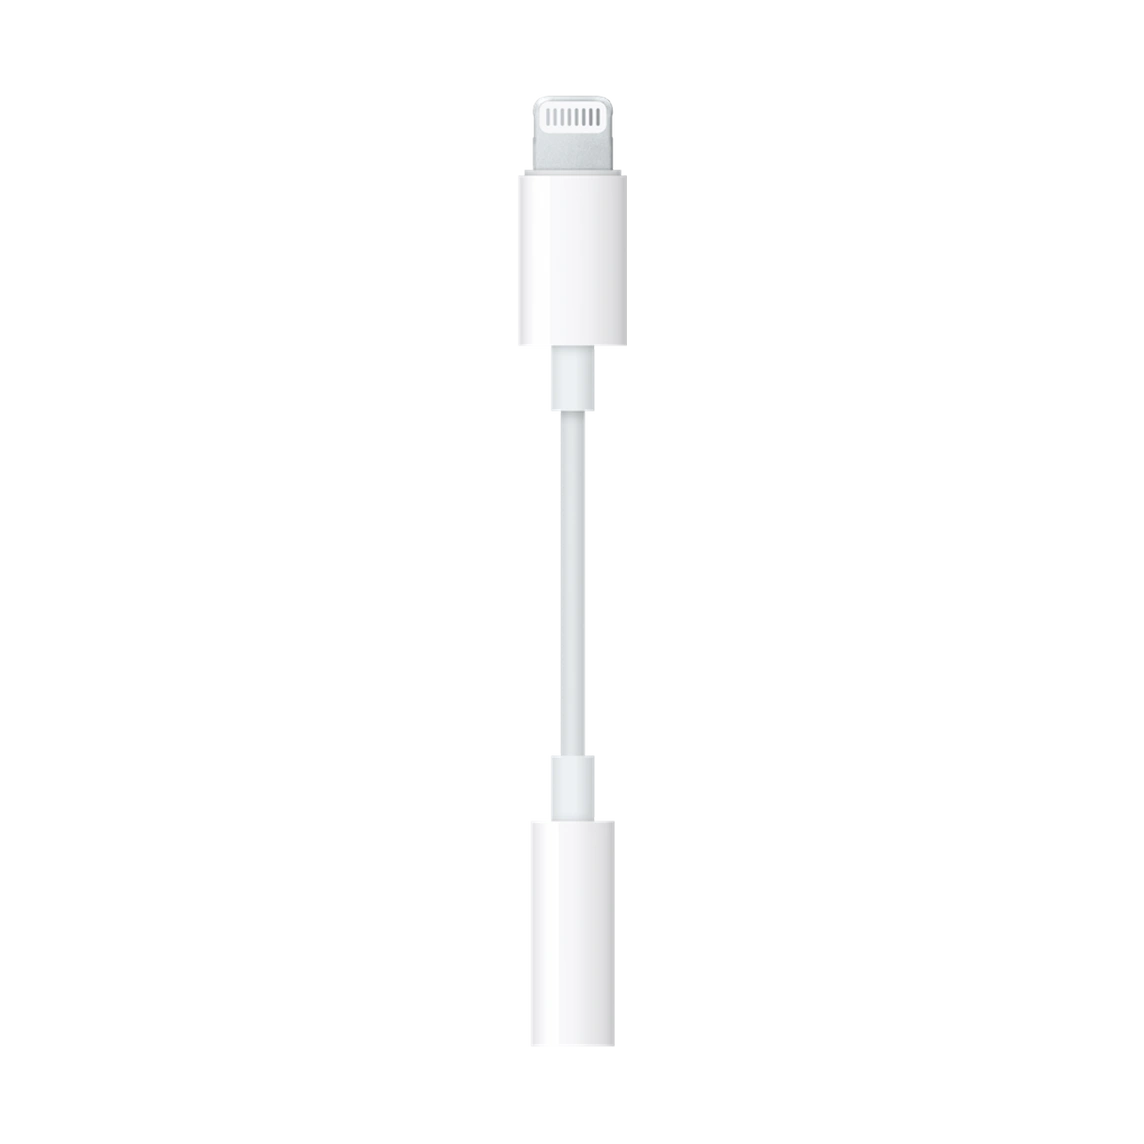 apple-lightning-to-3-5mm-headphone-jack-adapter